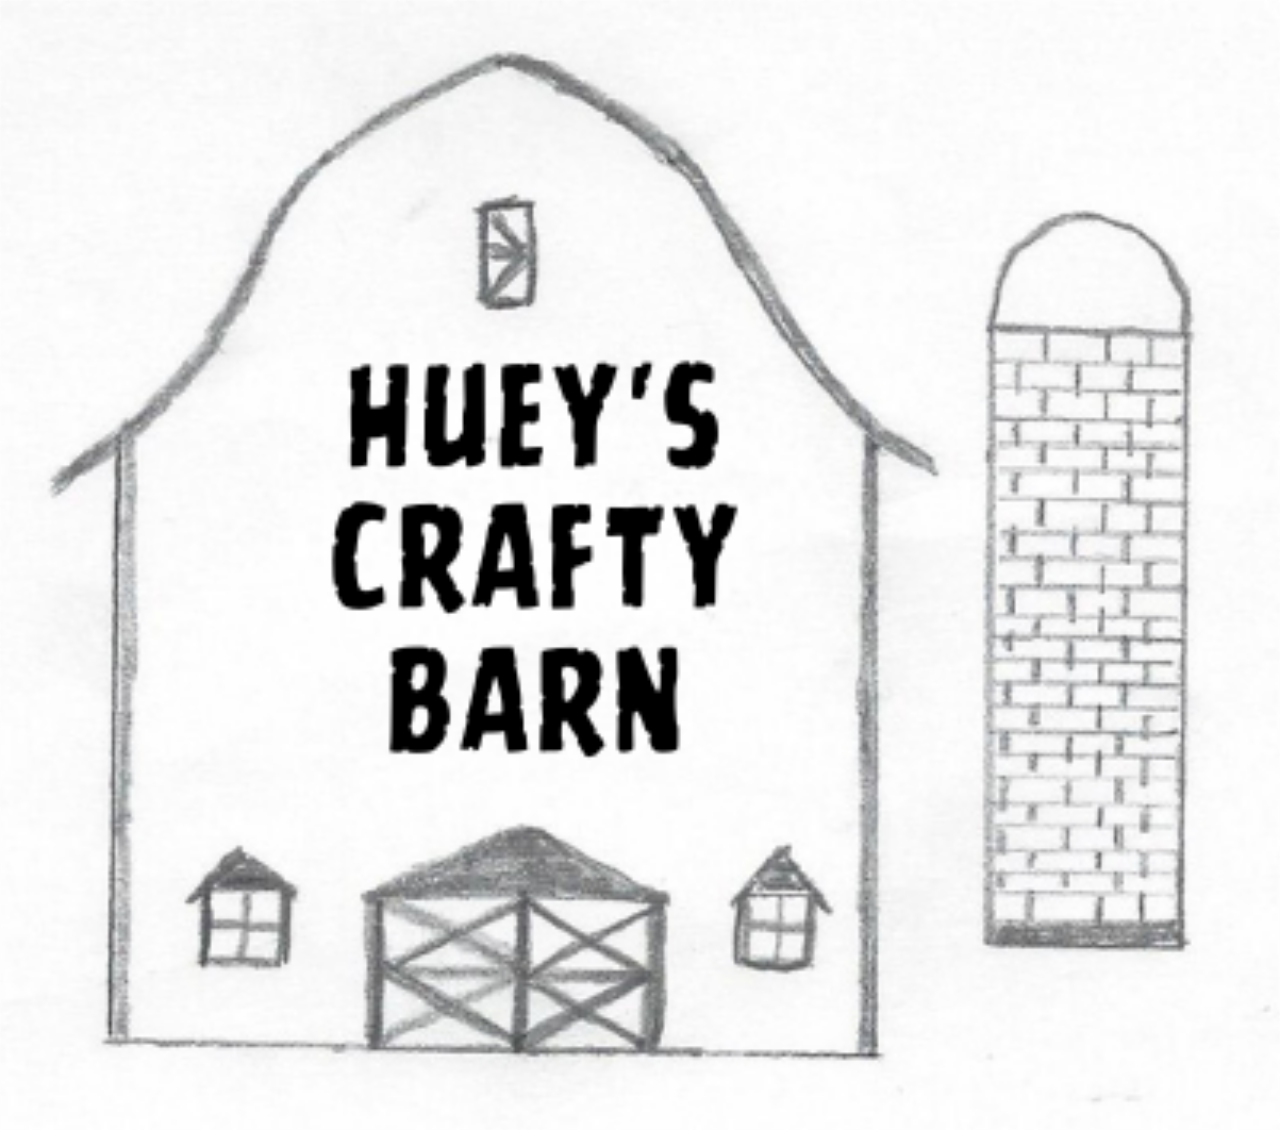 Huey's Crafty Barn's web page